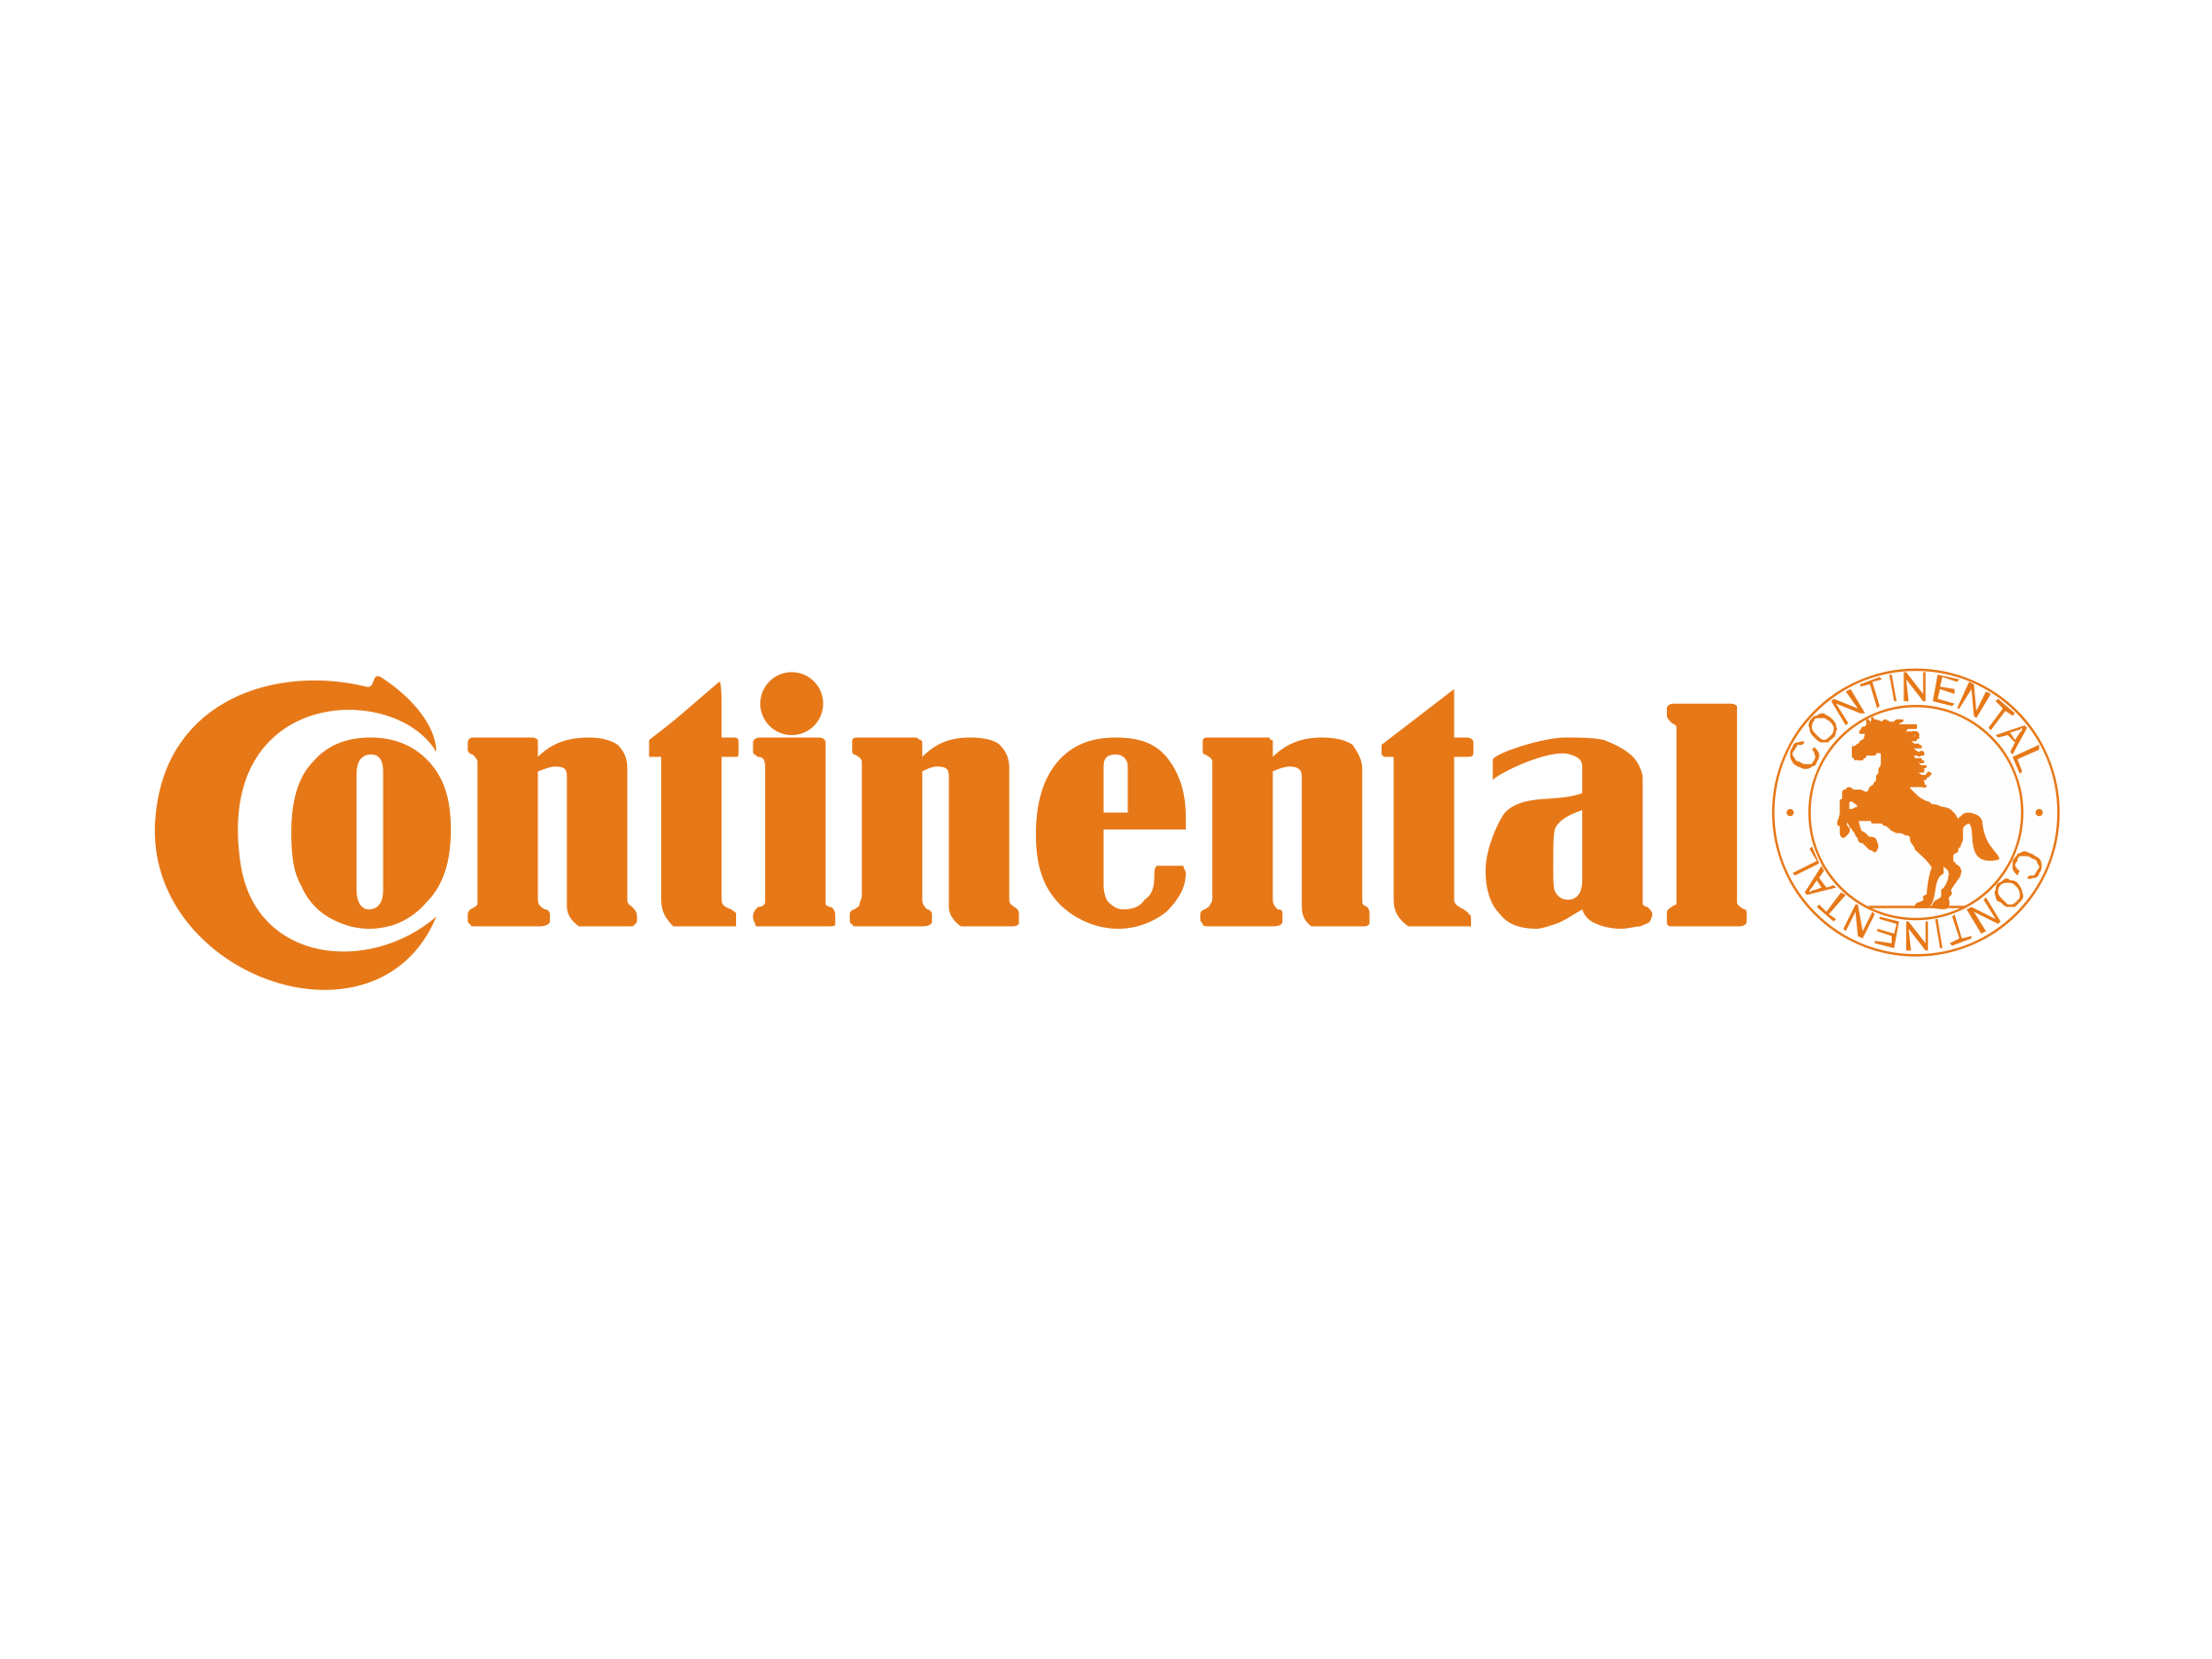 Continental-Tires-logo-horse